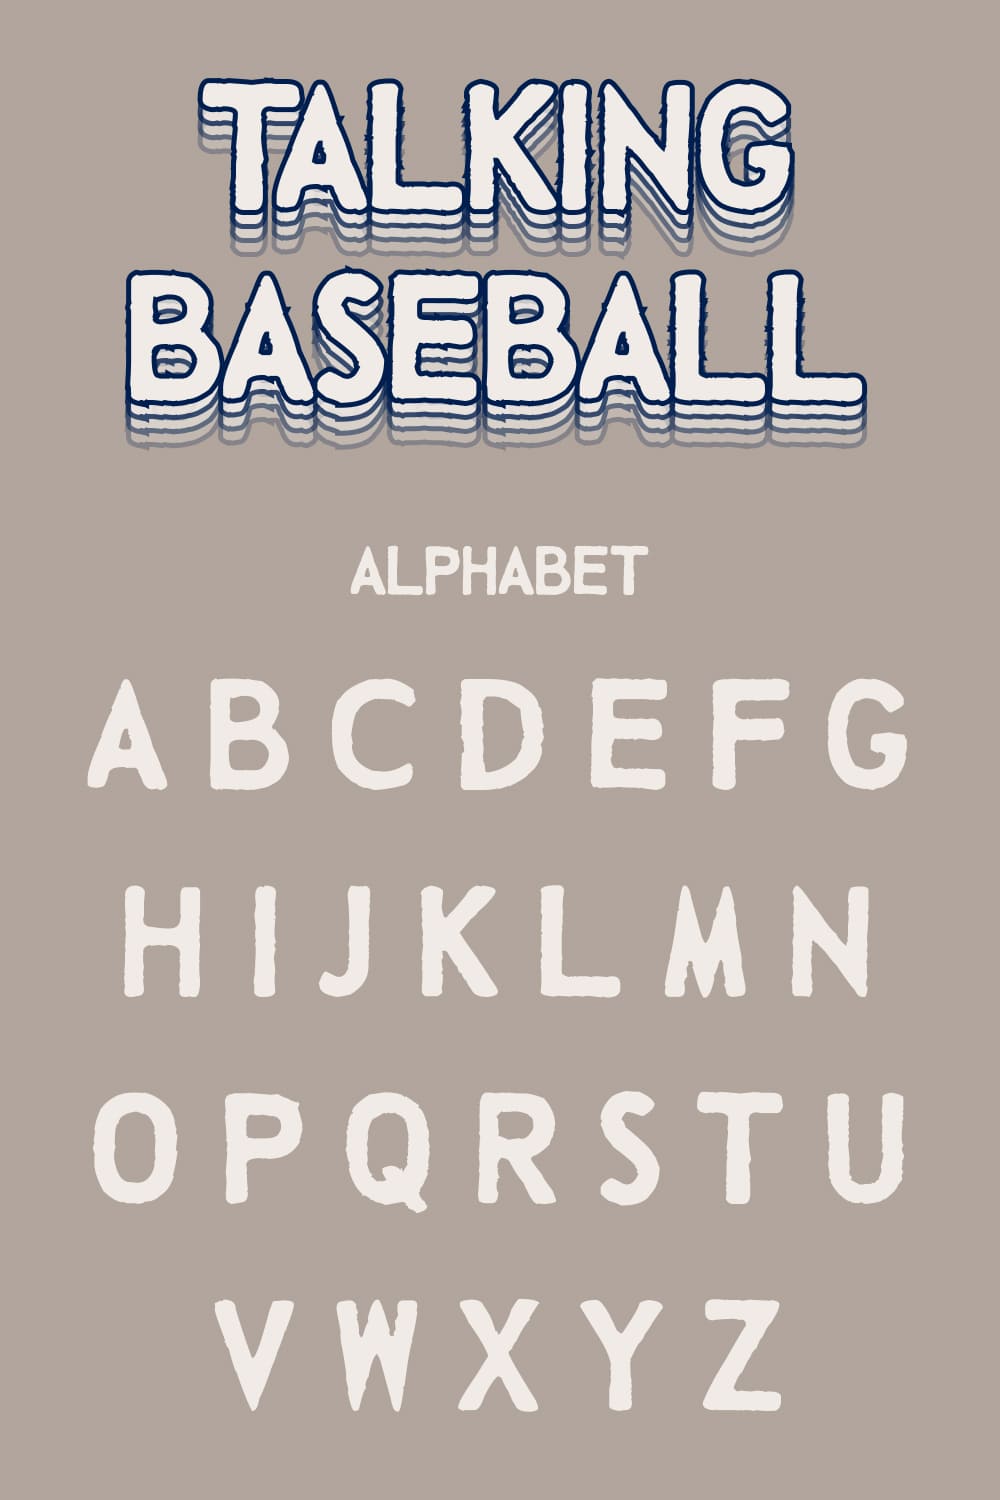 Free Baseball font - Pinterest.